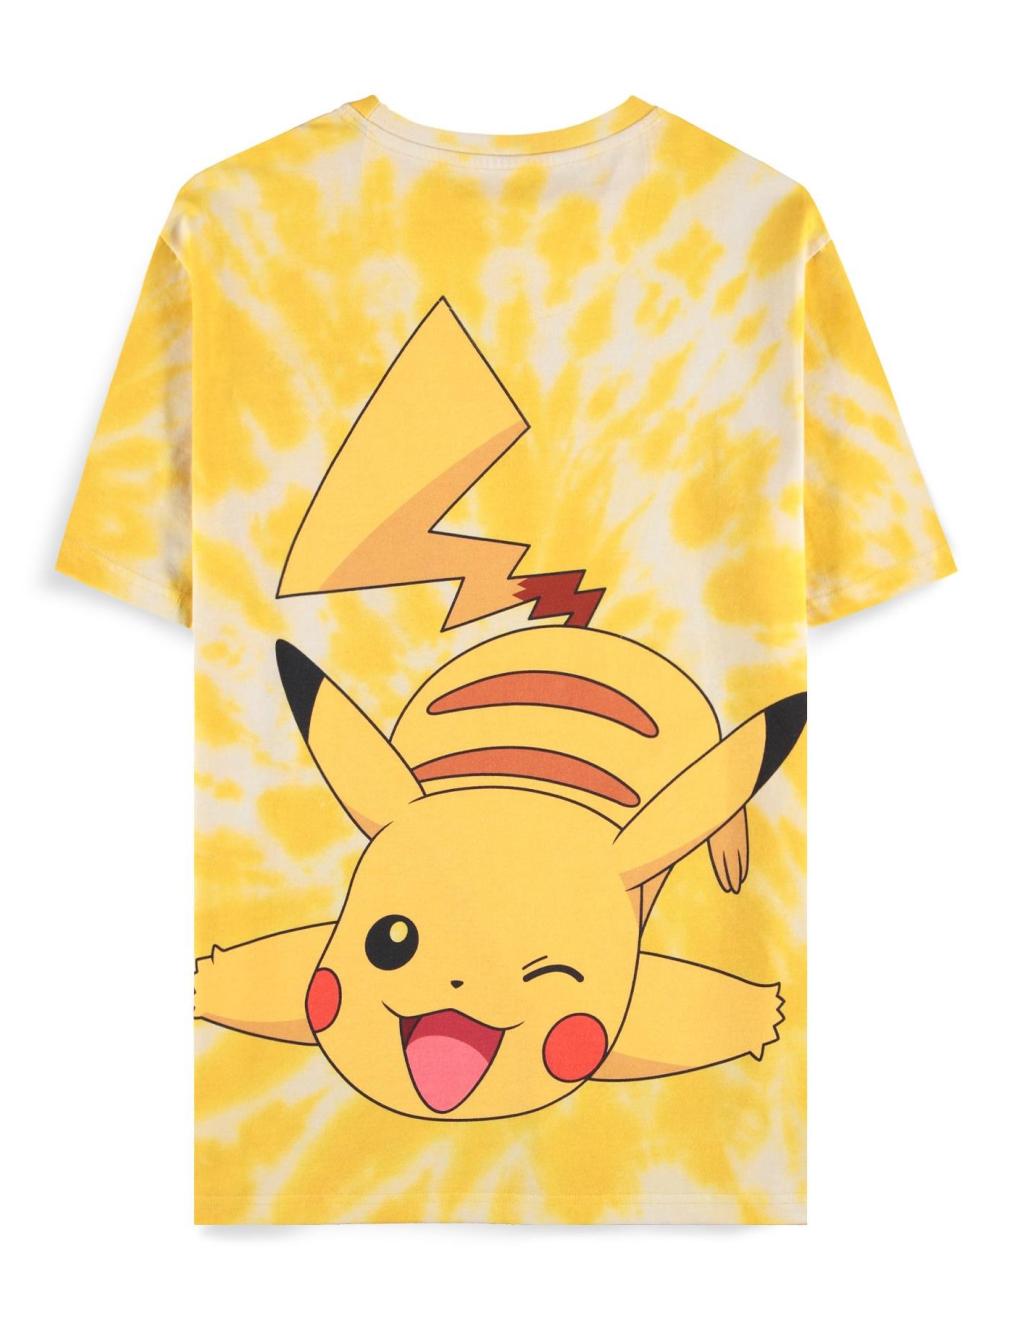 POKEMON - Ash and Pikachu - Men's T-shirt (L)